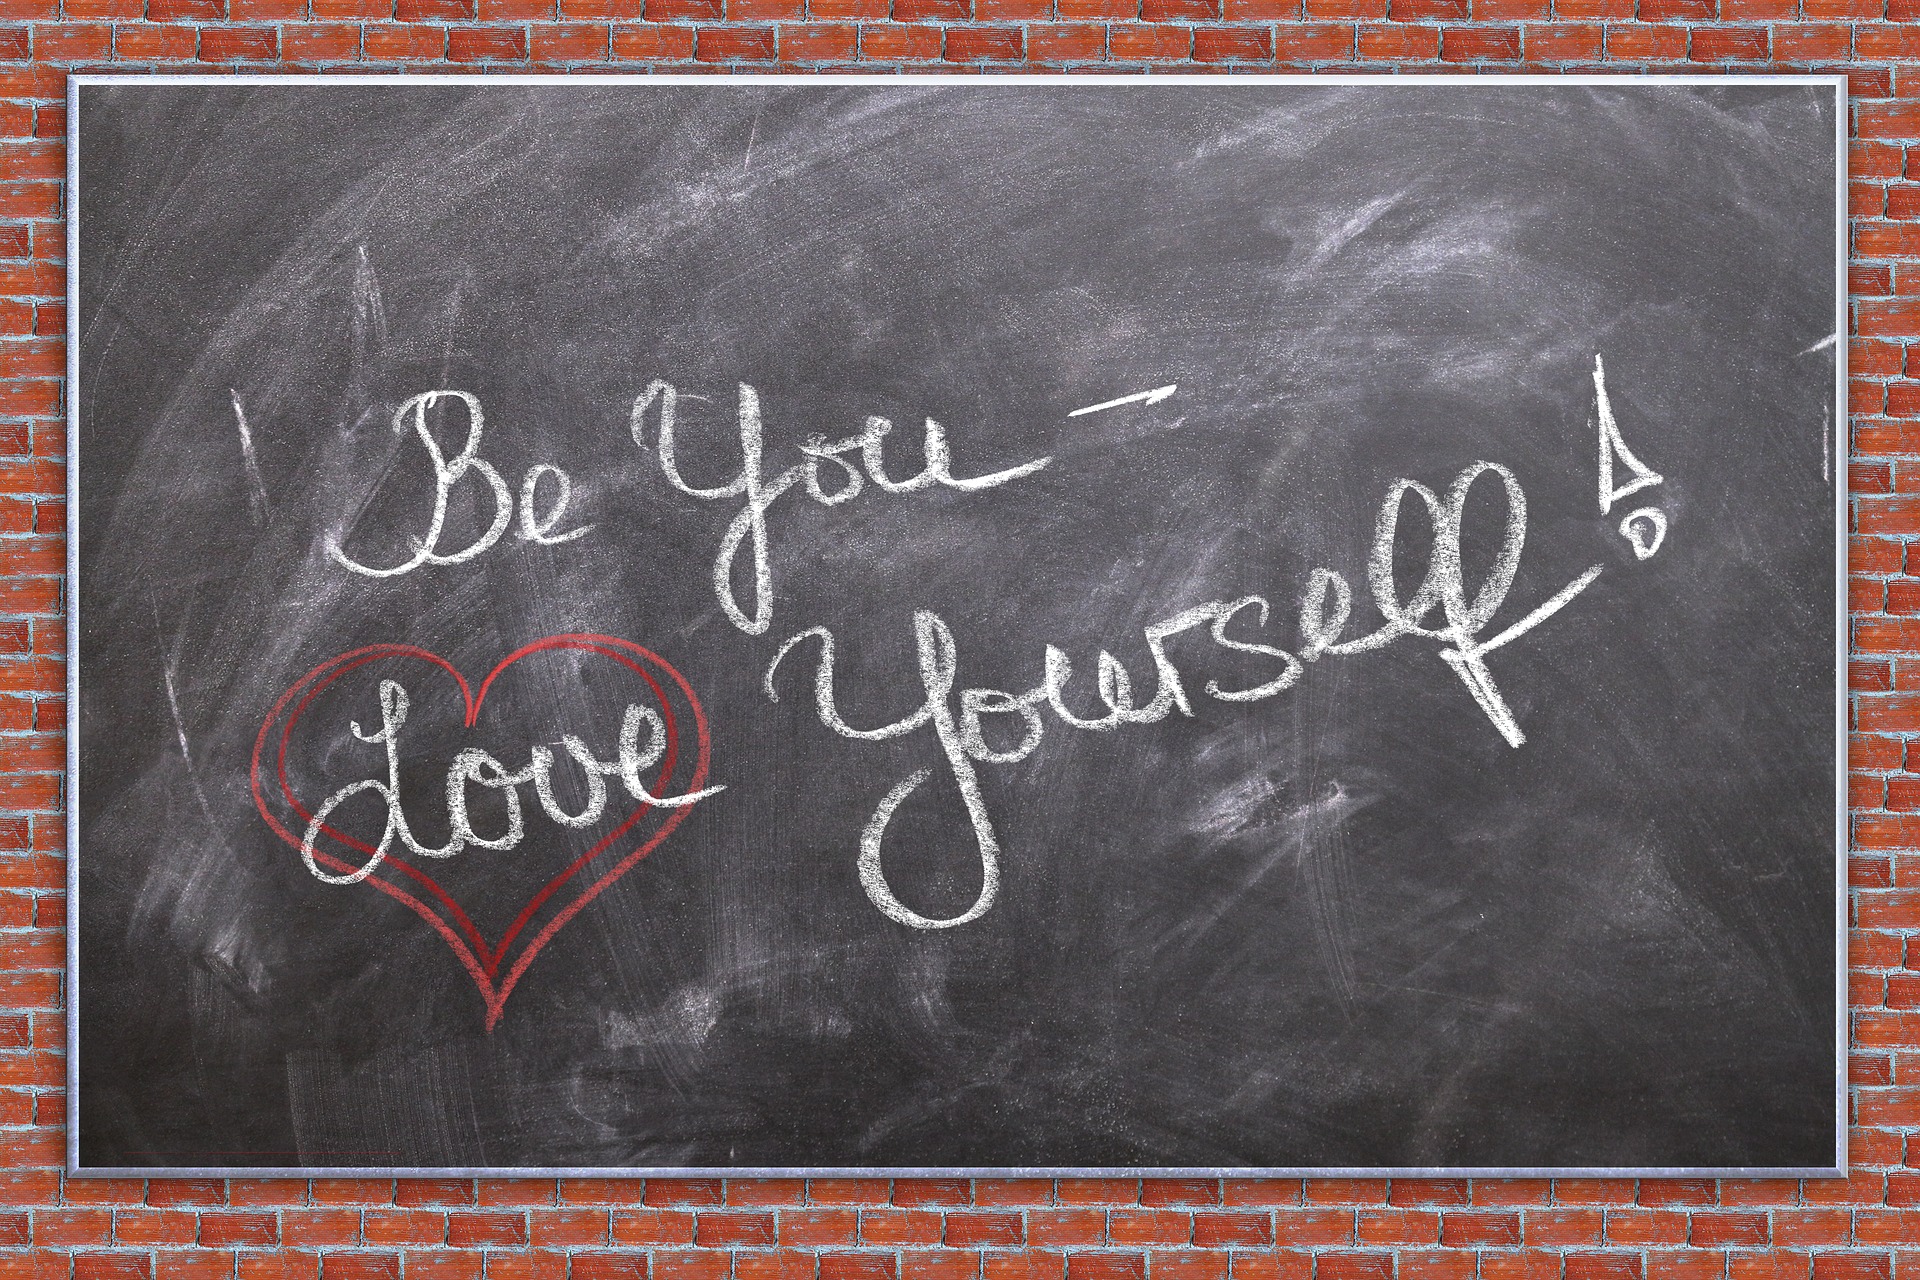 Blackboard says "Be you- love yourself!"